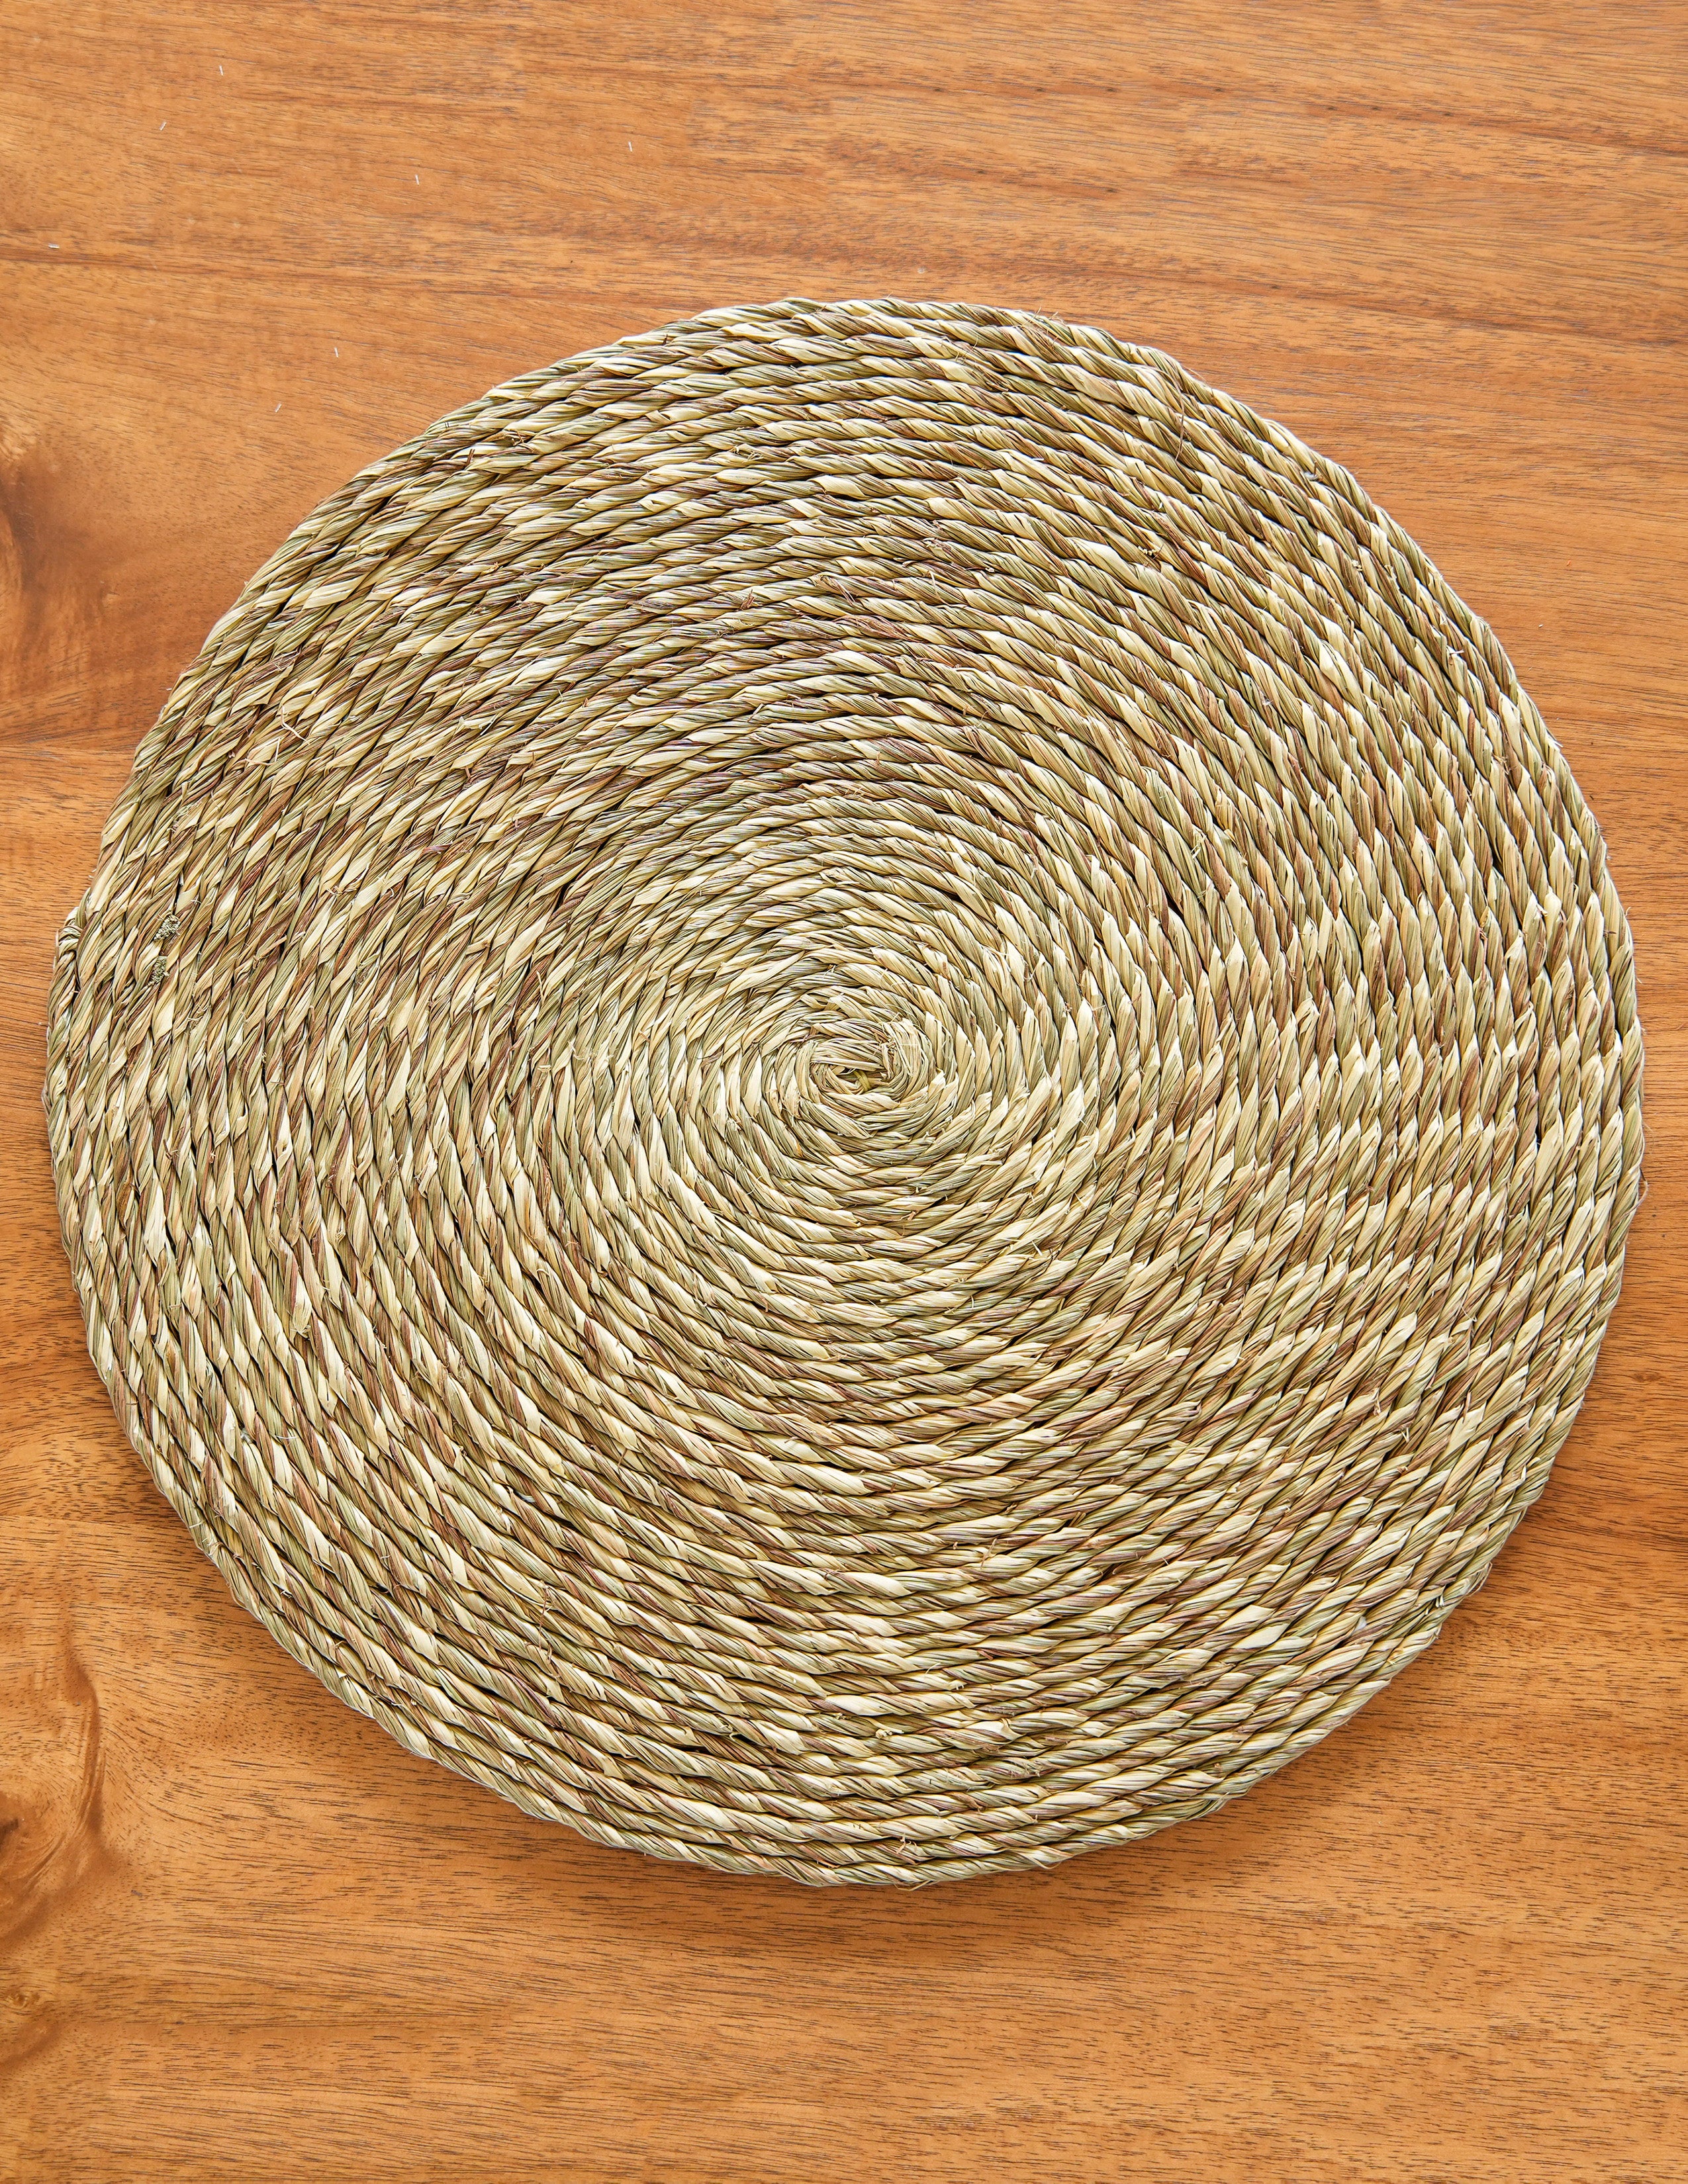 Handmade Sabai Grass Round Mats